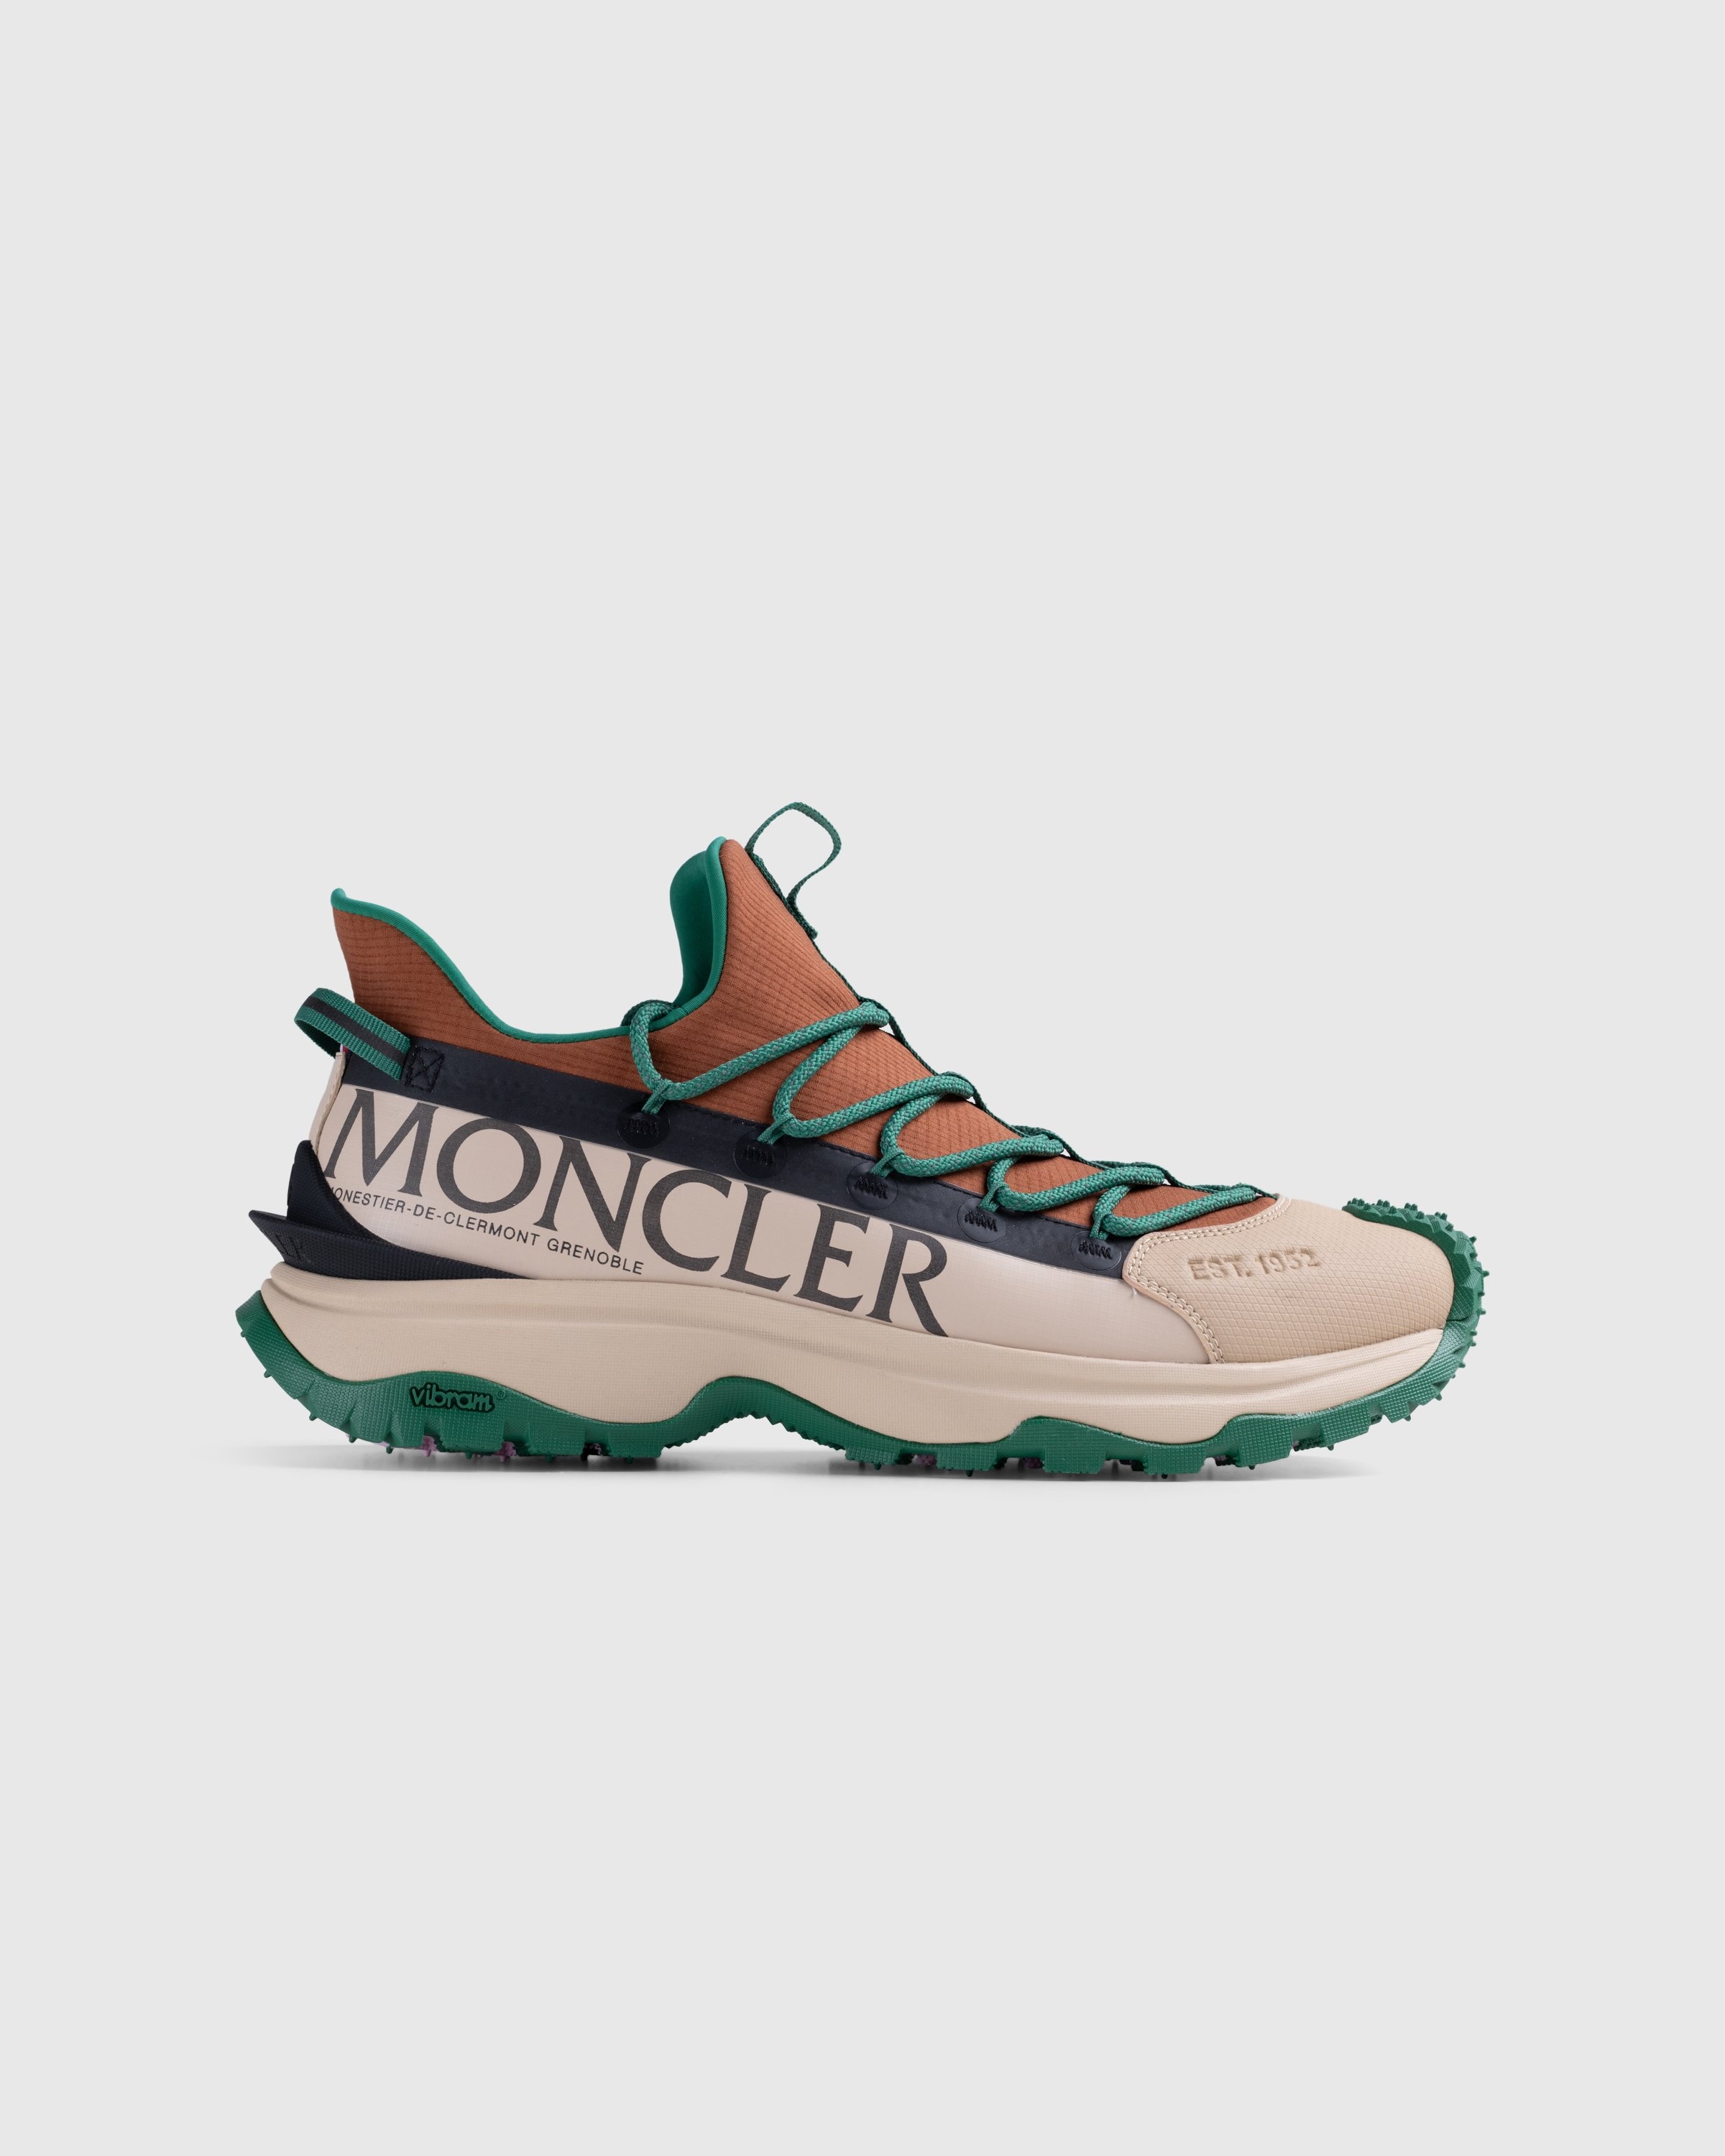 Moncler – Trailgrip Lite 2 Sneakers Brown/Green | Highsnobiety Shop